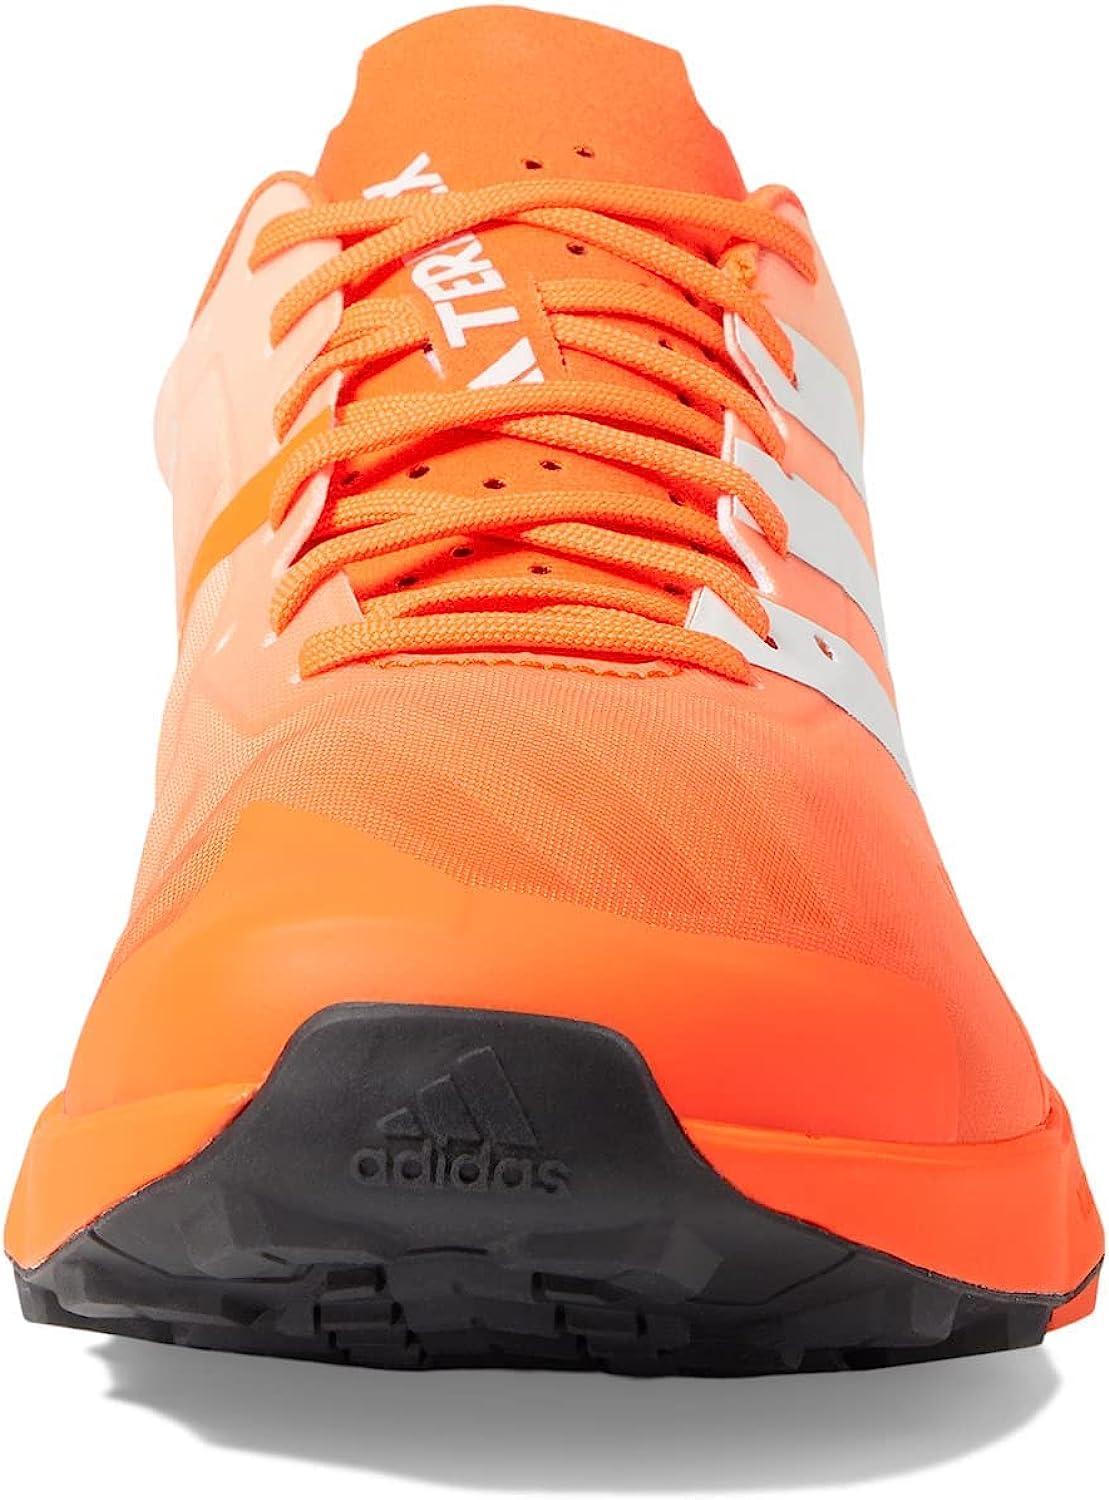 adidas Originals NMD_R1 sneakers in impact orange | ASOS